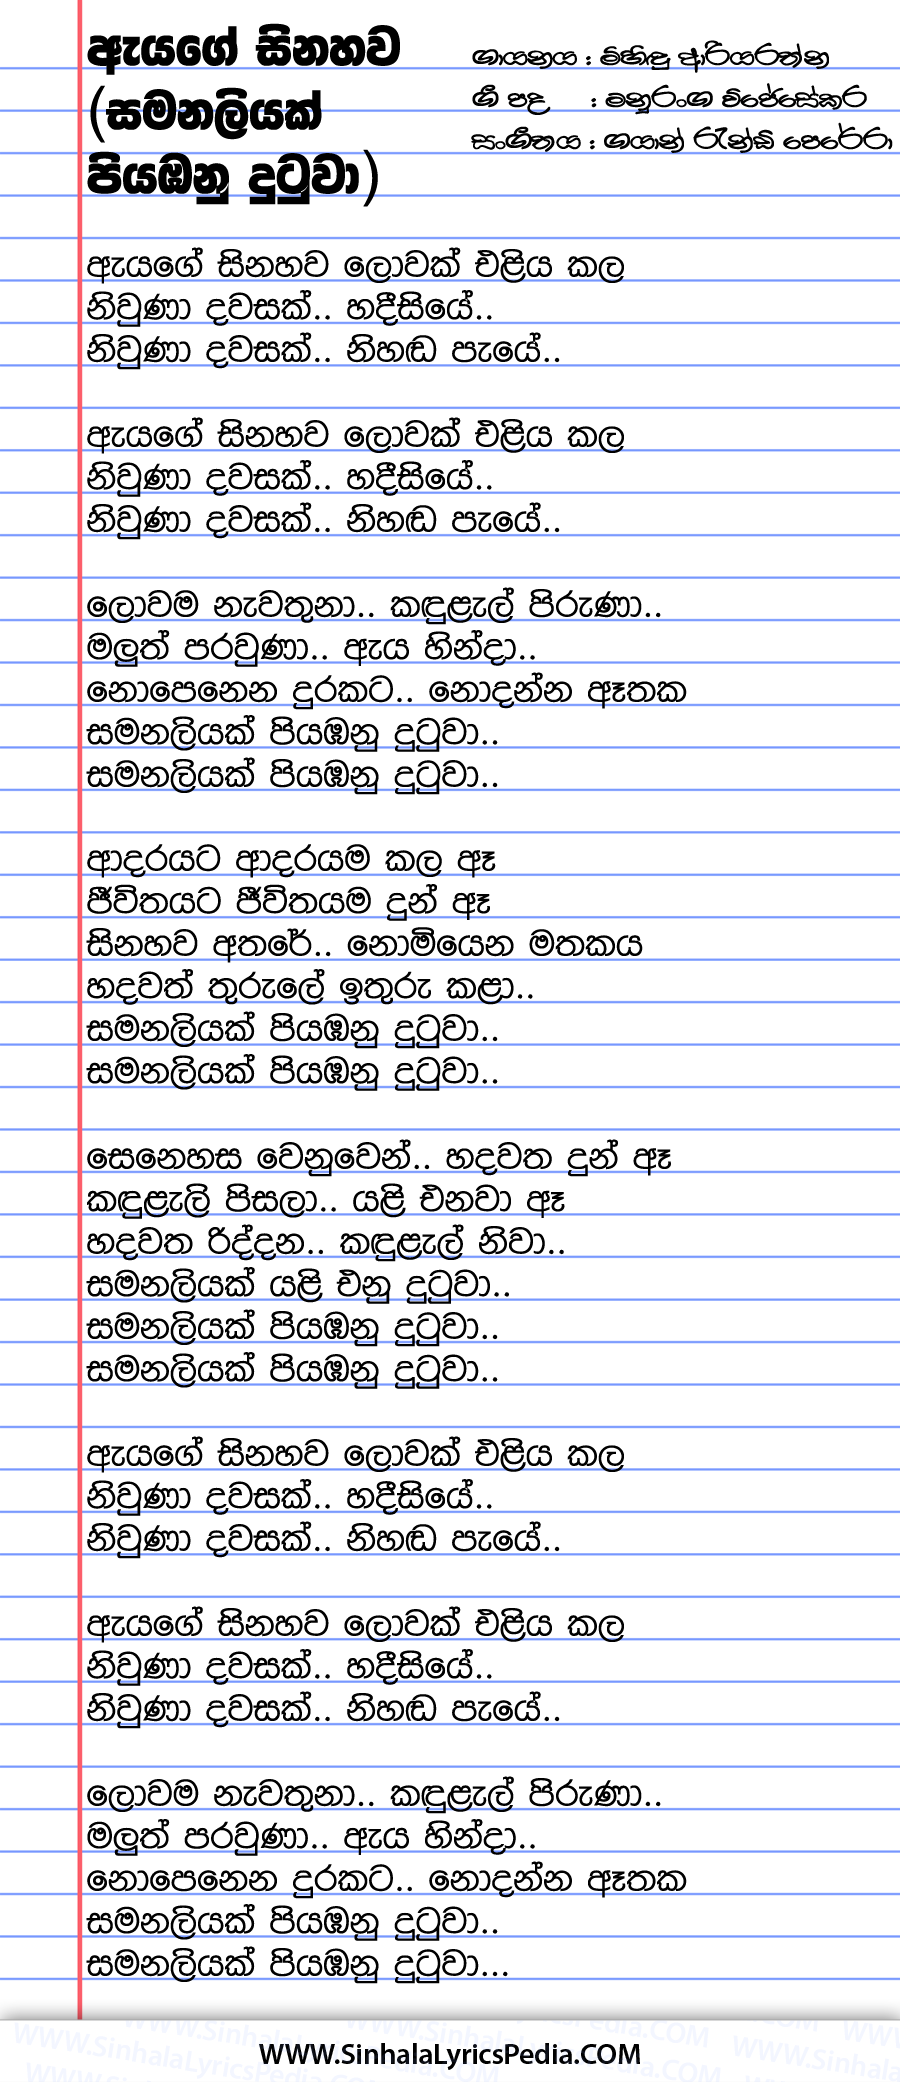 Ayage Sinahawa (Samanaliyak Piyambanu Dutuwa) Song Lyrics